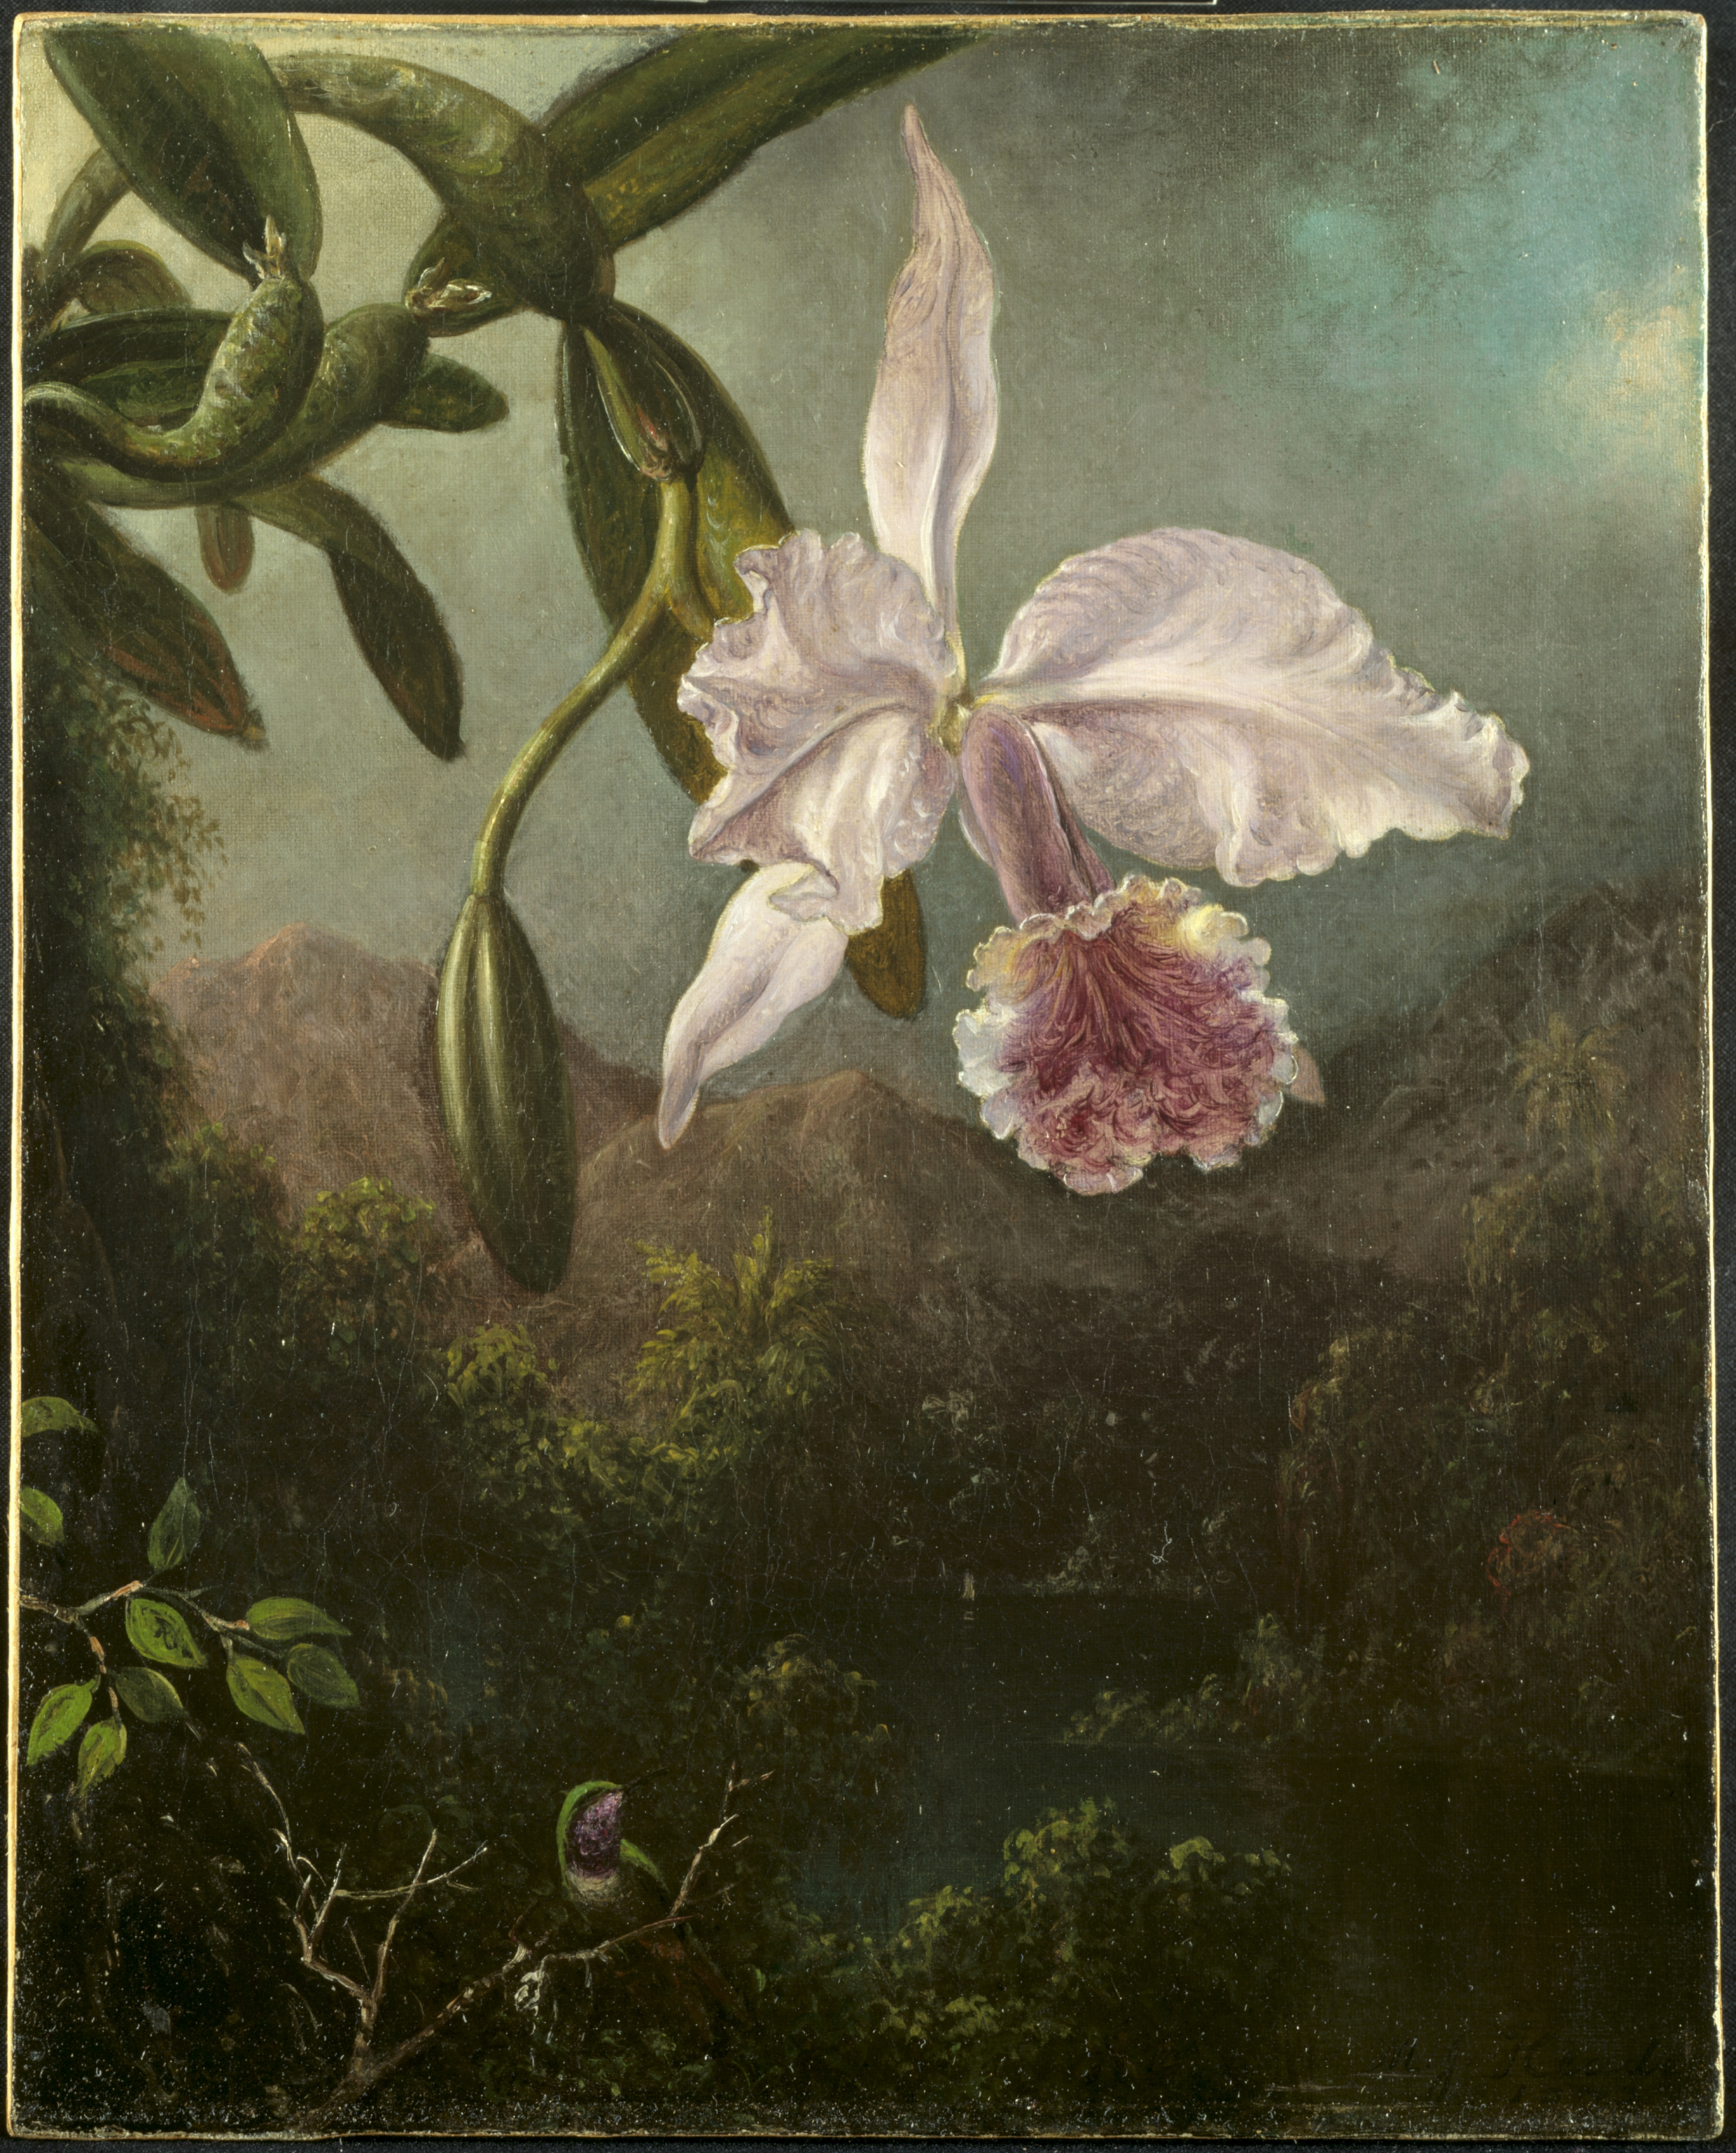 Rozkwit Orchidei by Martin Johnson Heade - 1873 - 47.6 x 40 cm 